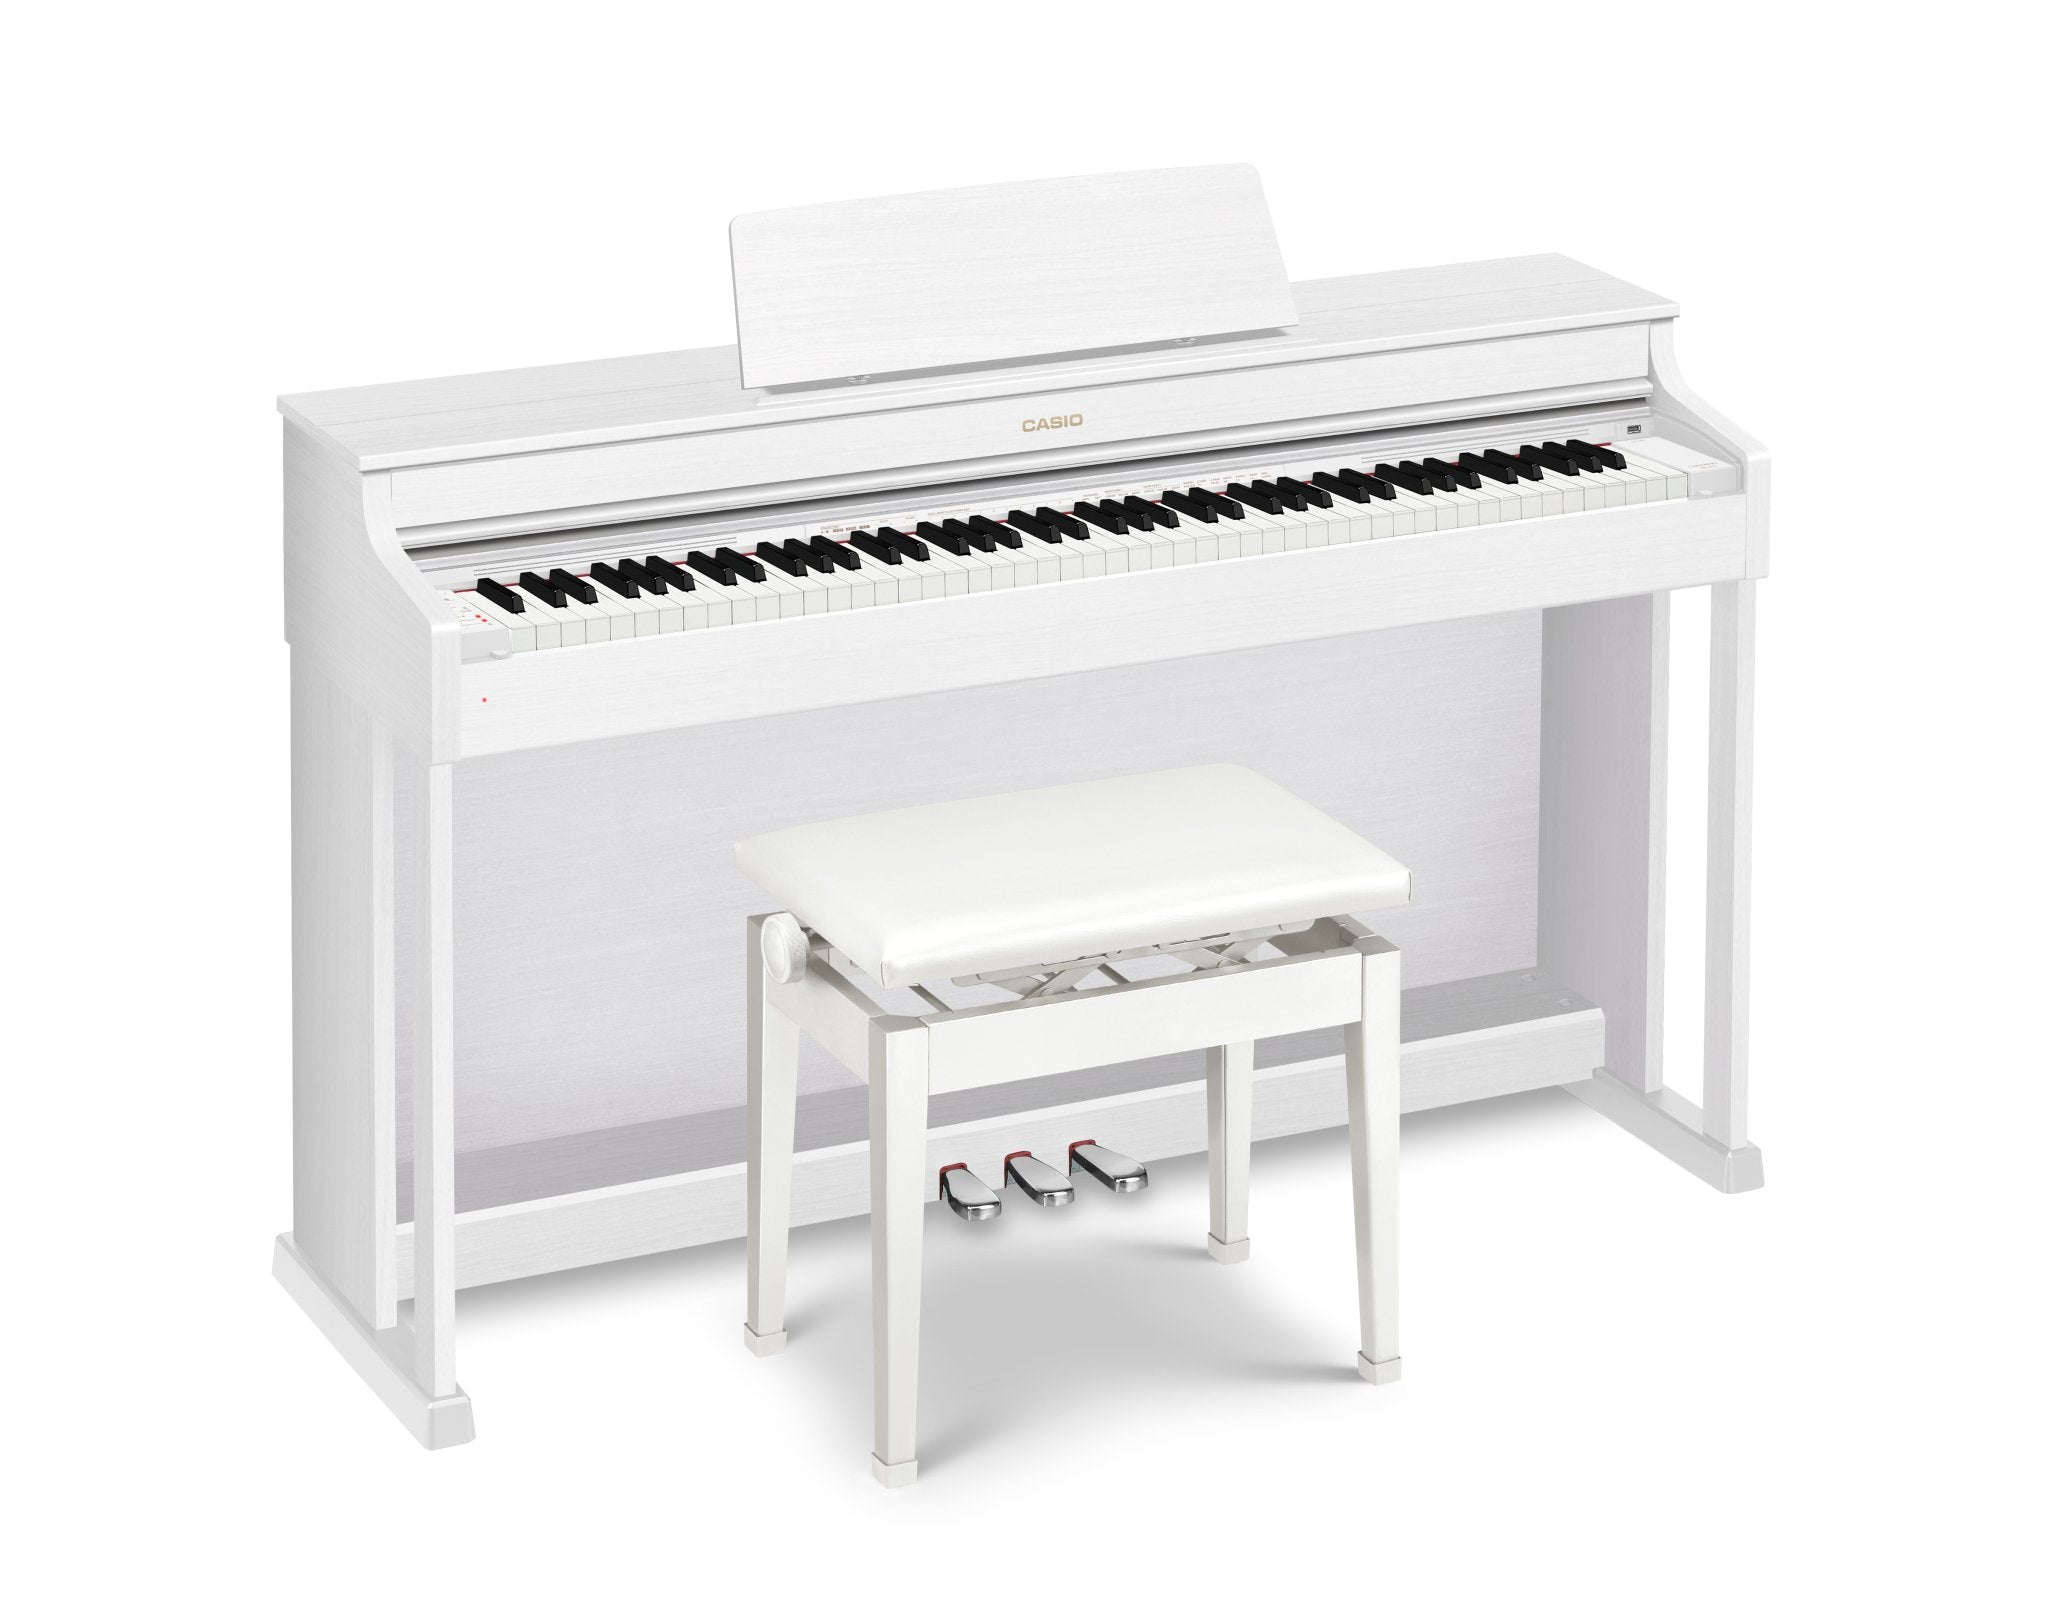  Casio Celviano, 88-Key Digital Pianos-Home (AP-270BK